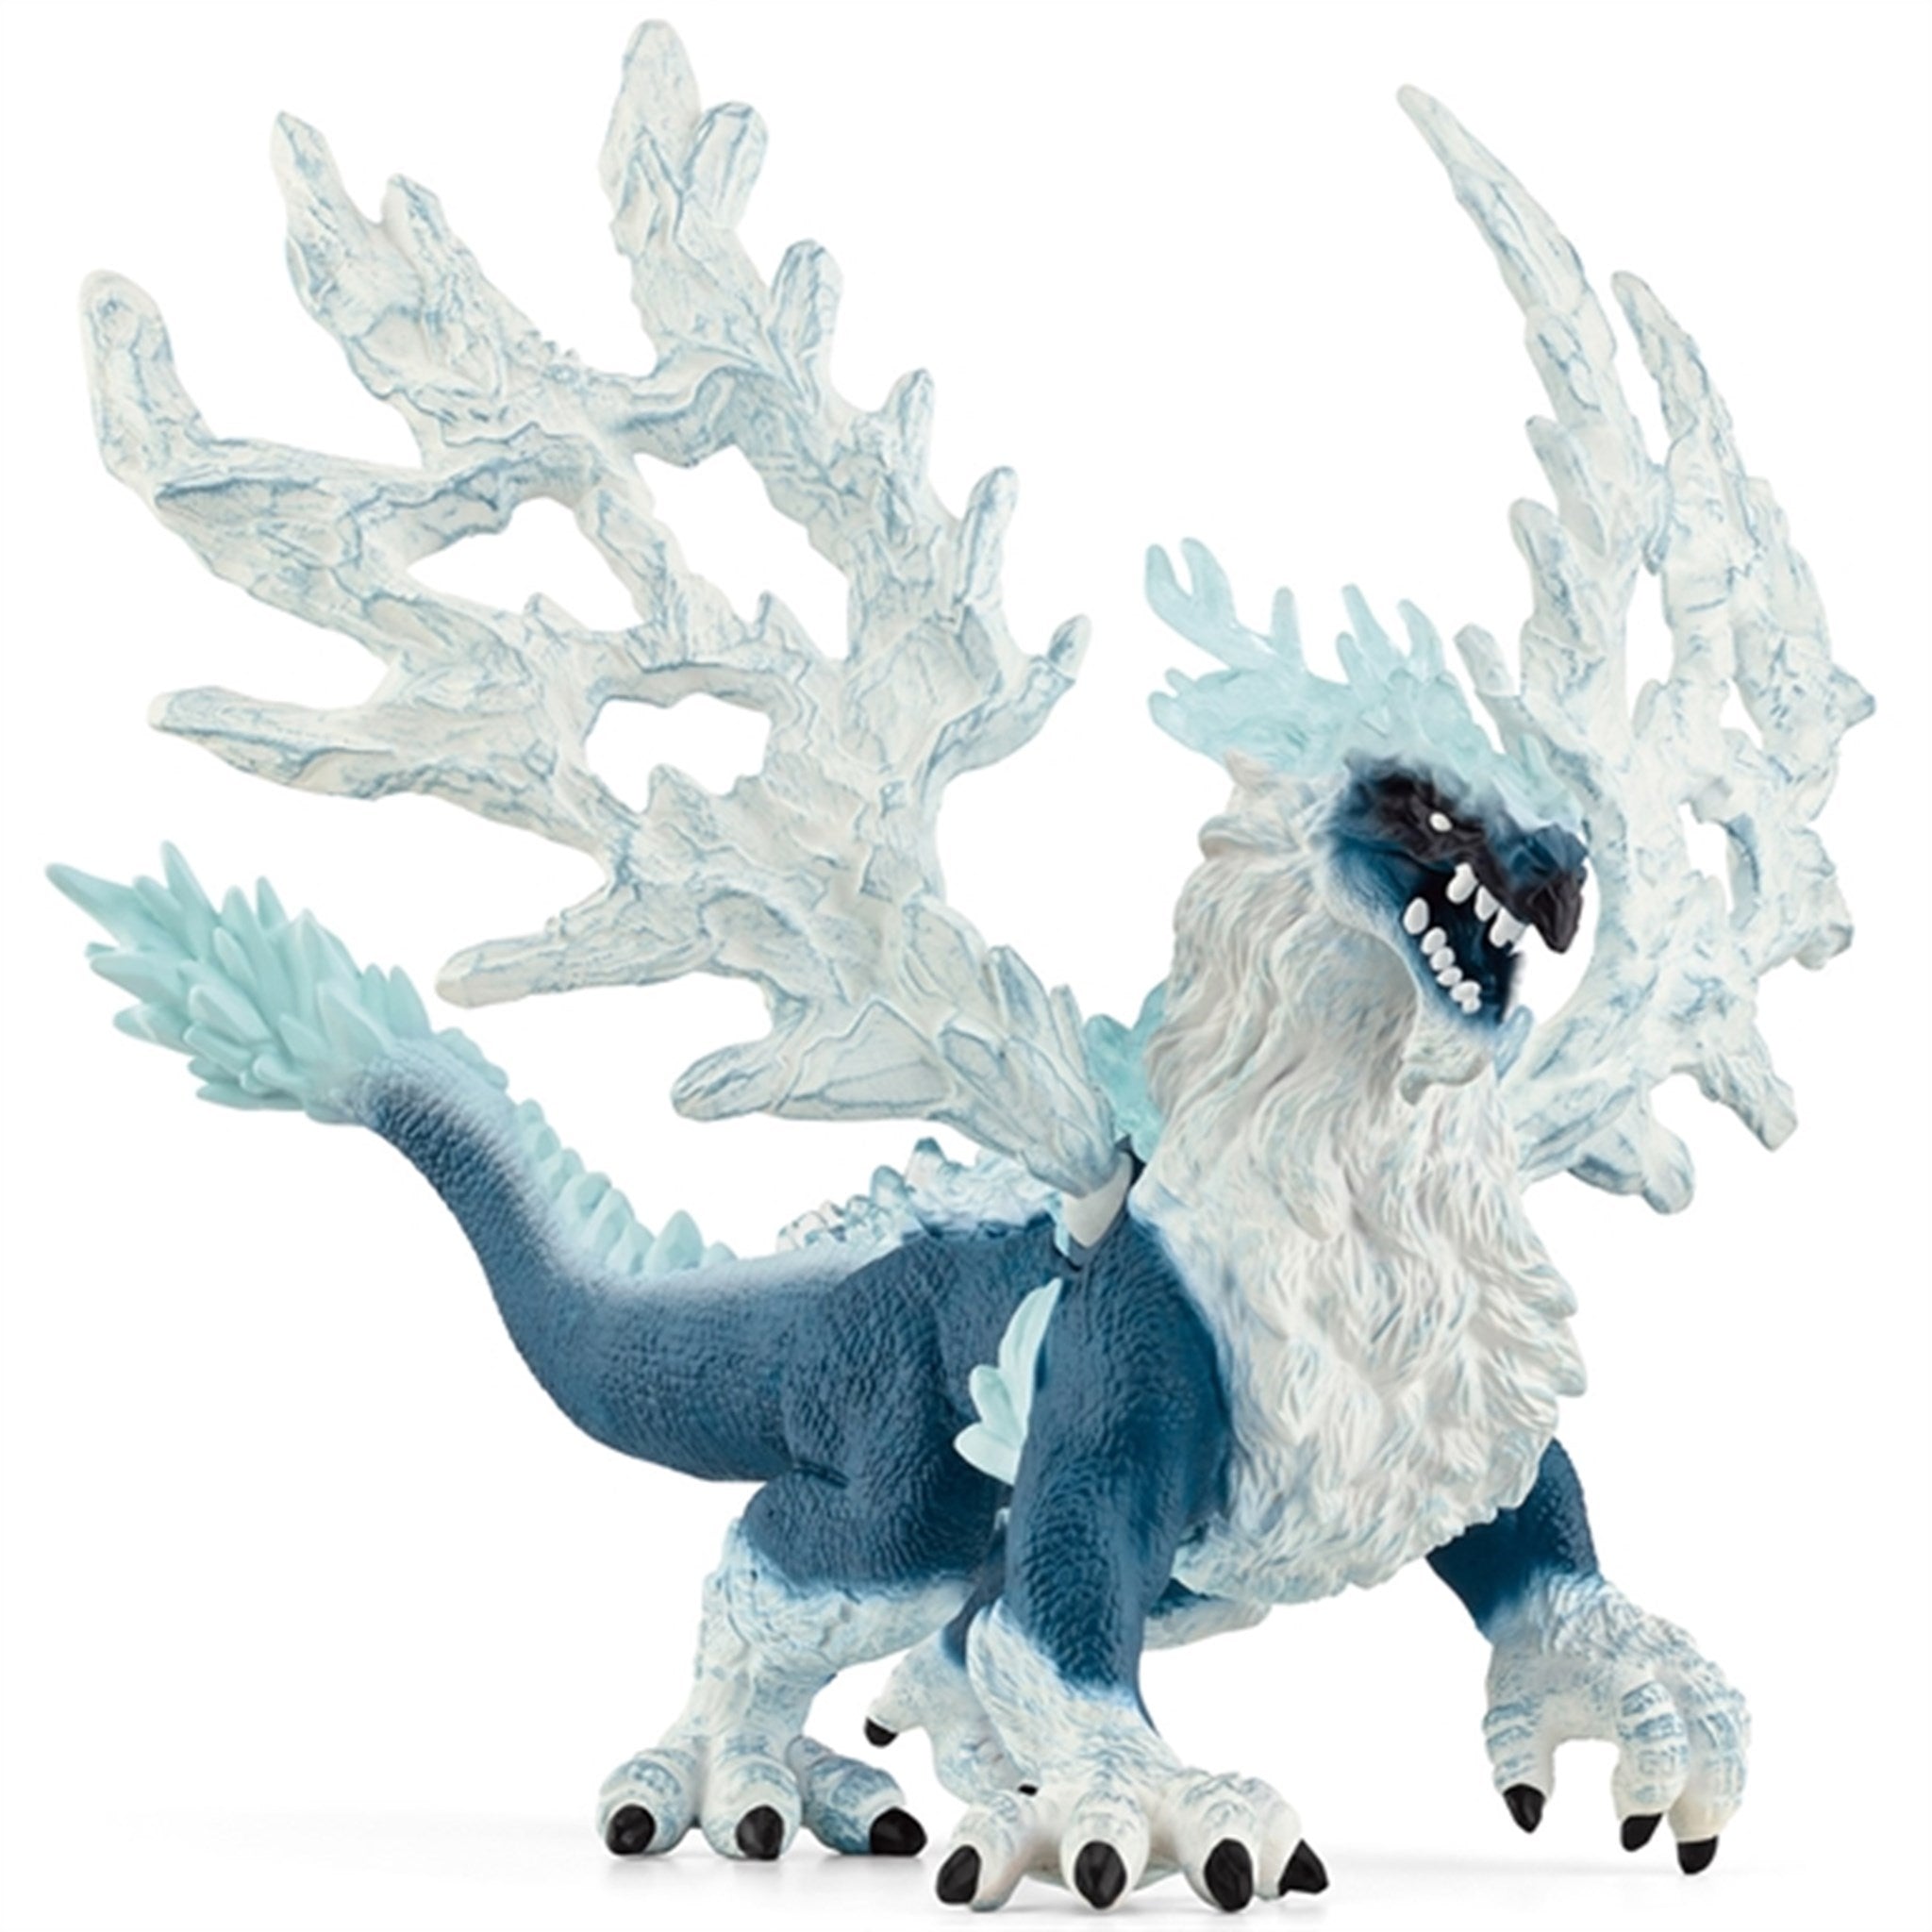 Schleich Eldrador Creatures Ice Dragon 2